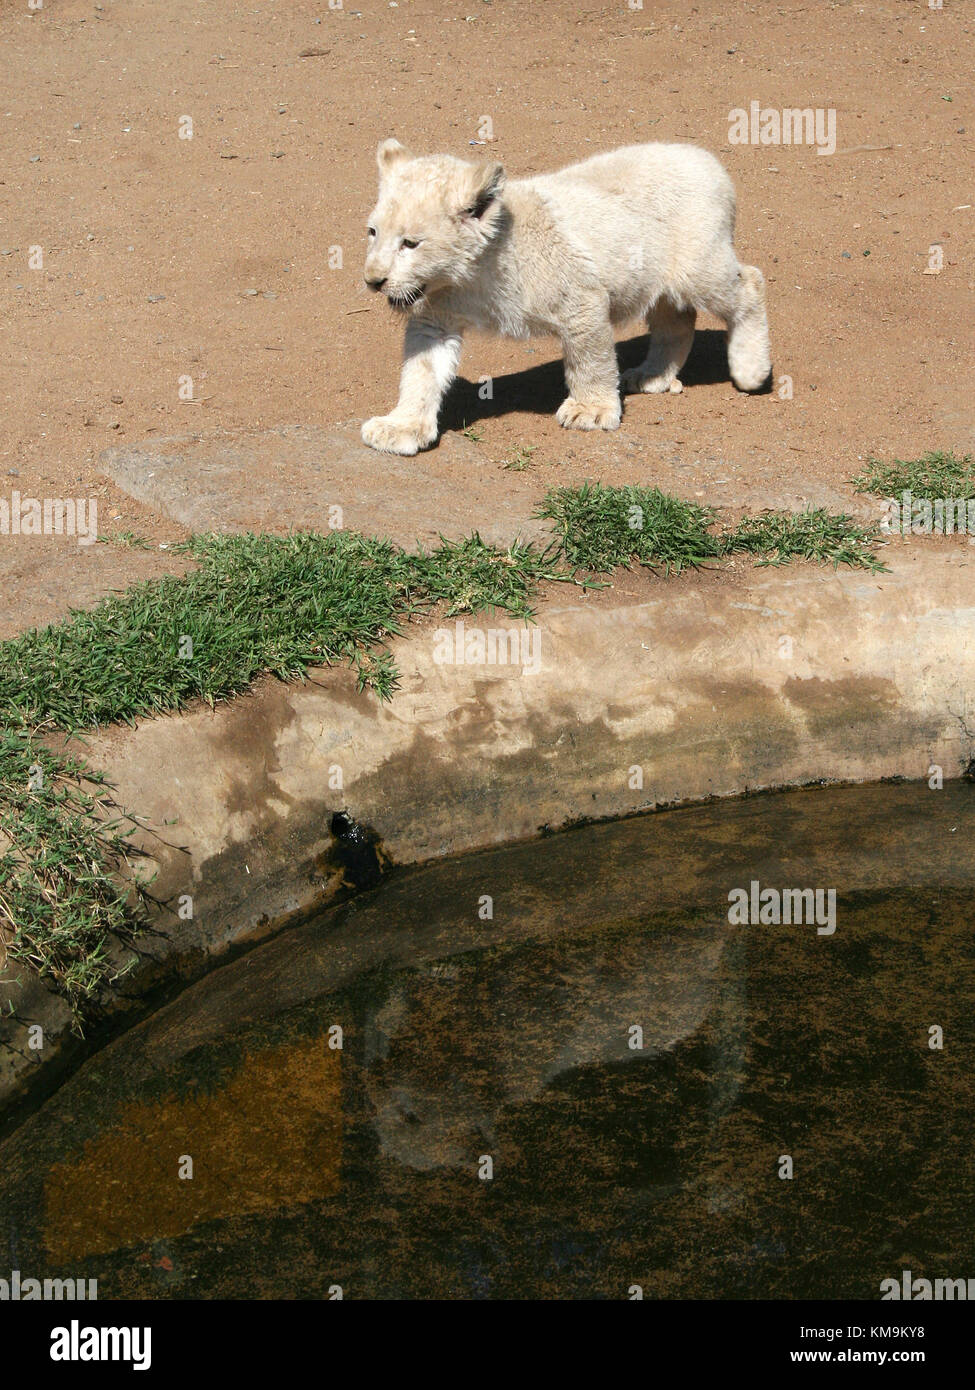 Lion Park, White lion cub walking, Panthera leo krugeri Stock Photo